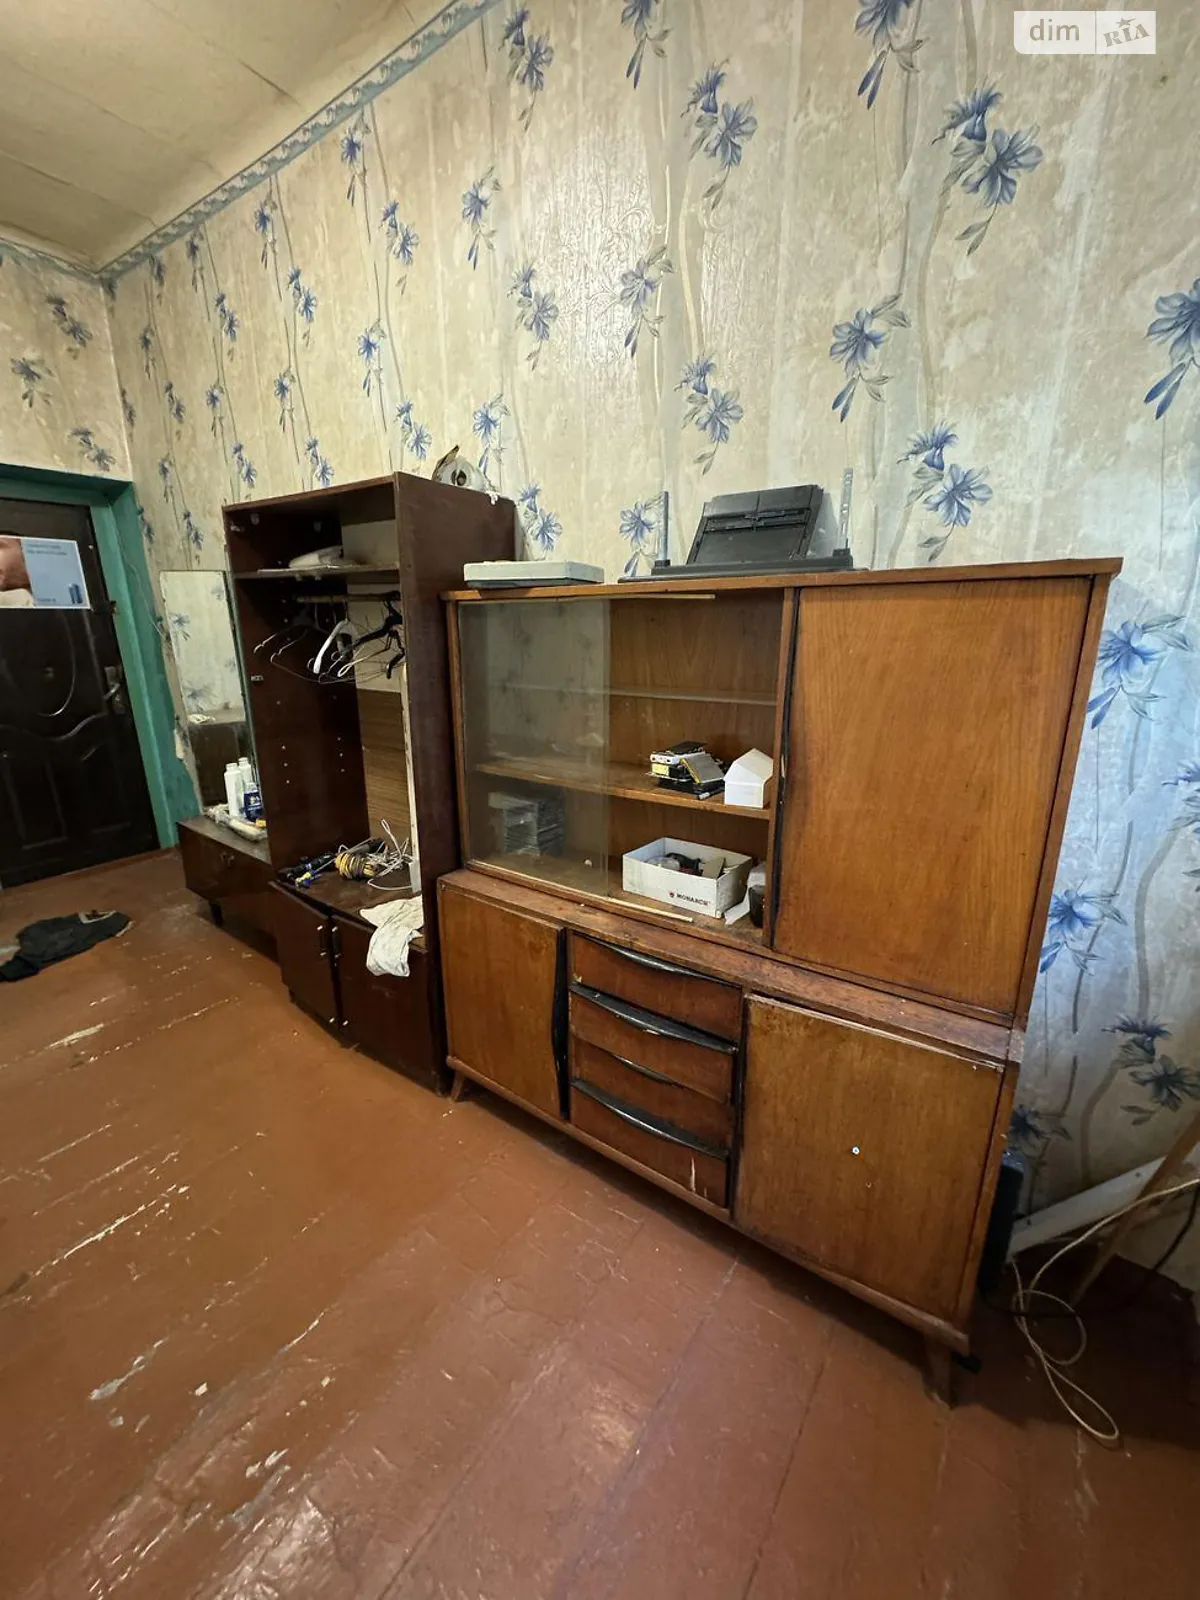 Продается комната 11 кв. м в Харькове - фото 2